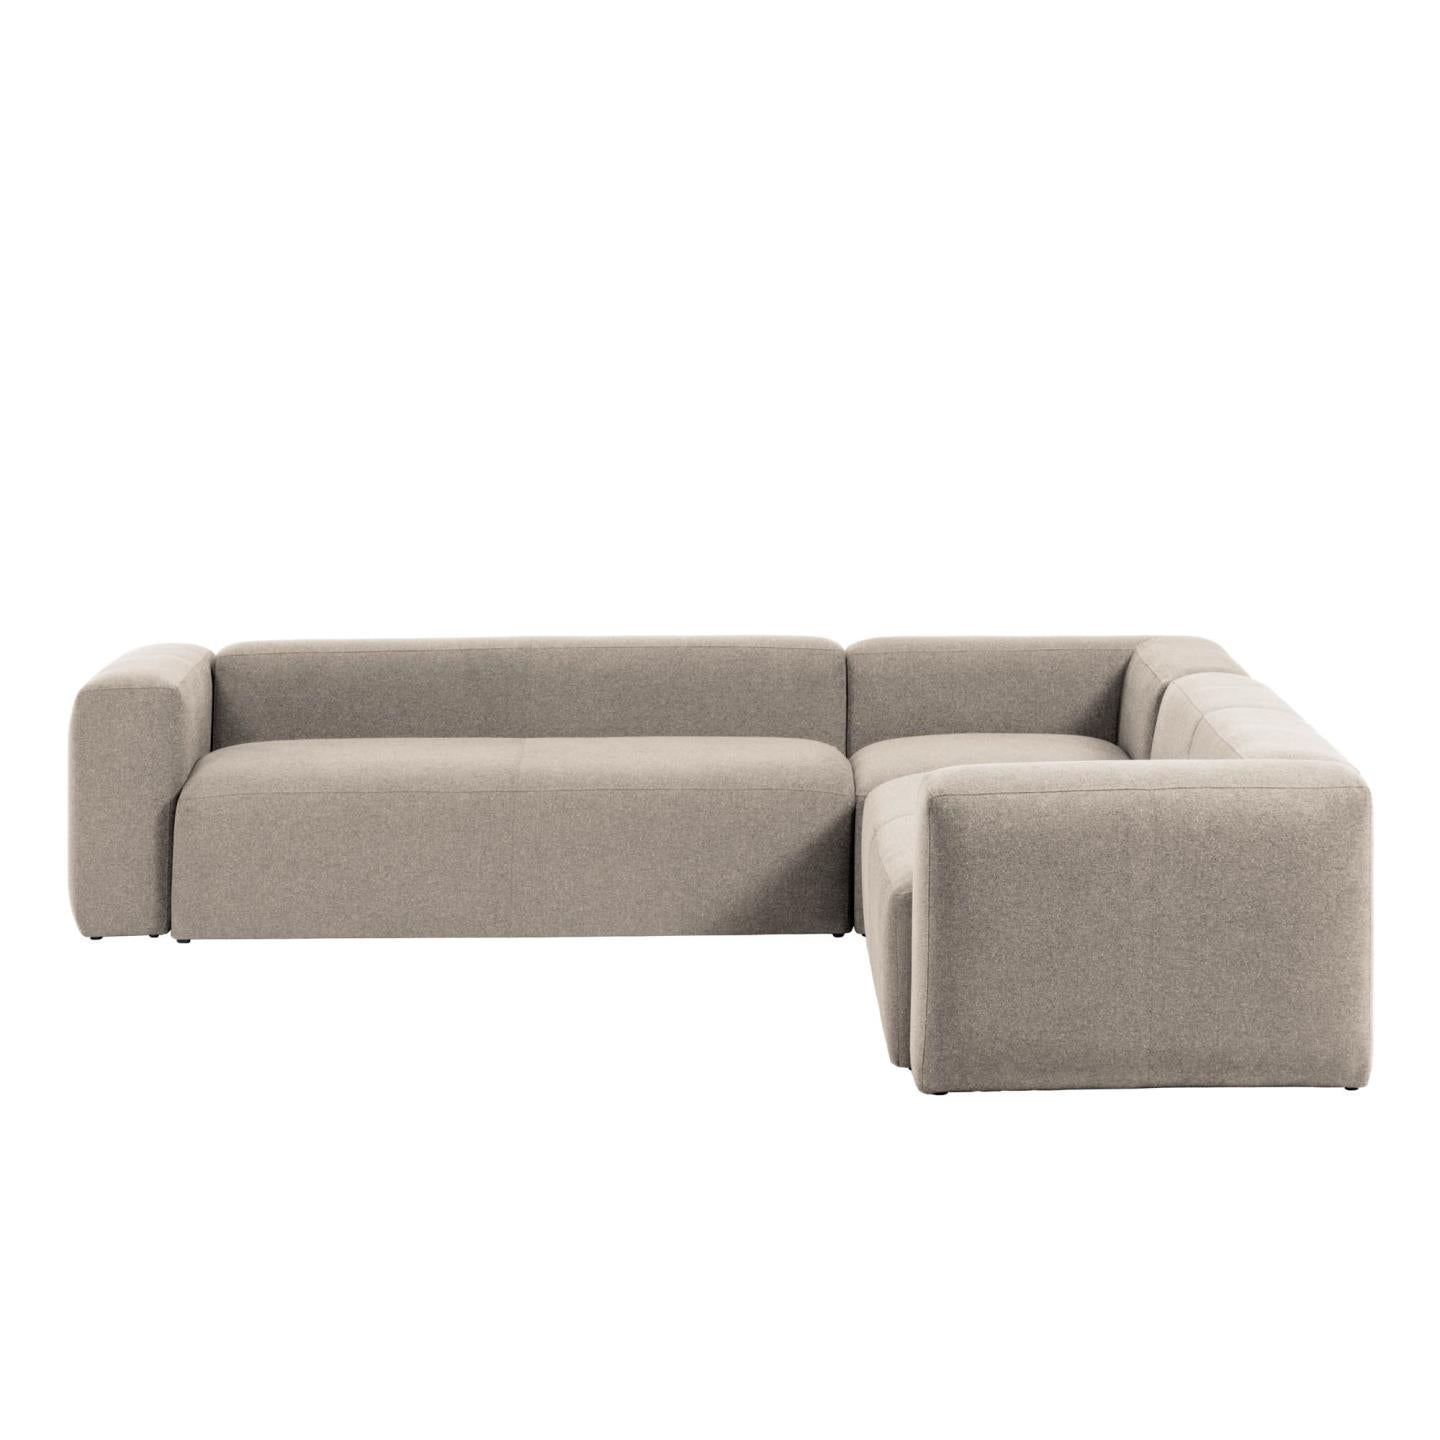 Blok 6 seater corner sofa in beige, 320 x 320 cm